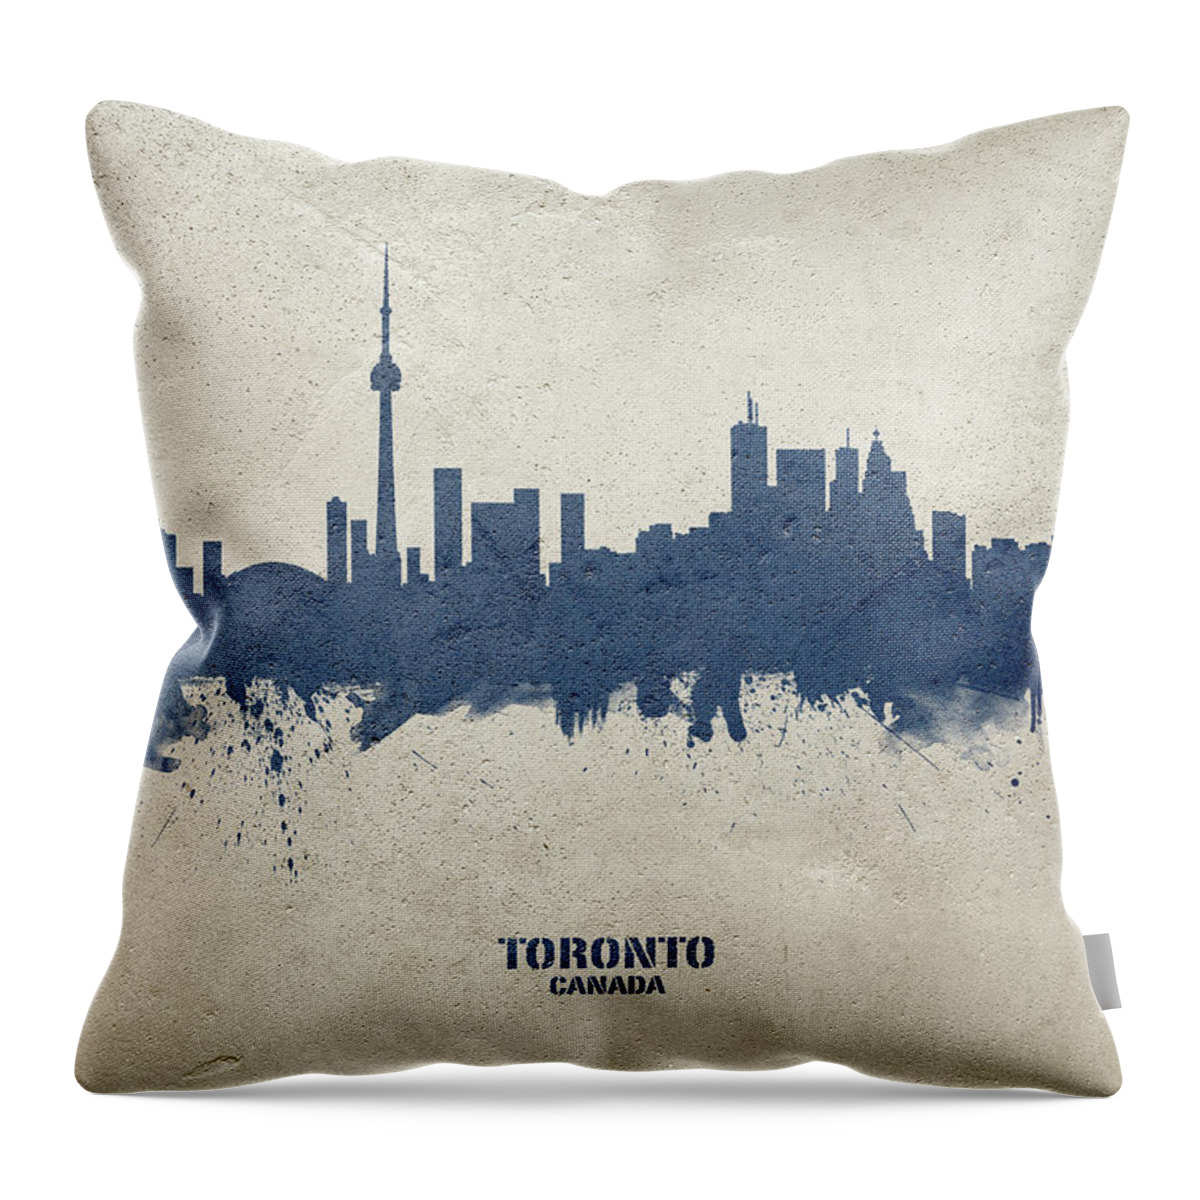 Toronto Throw Pillow featuring the digital art Toronto Canada Skyline #40 by Michael Tompsett